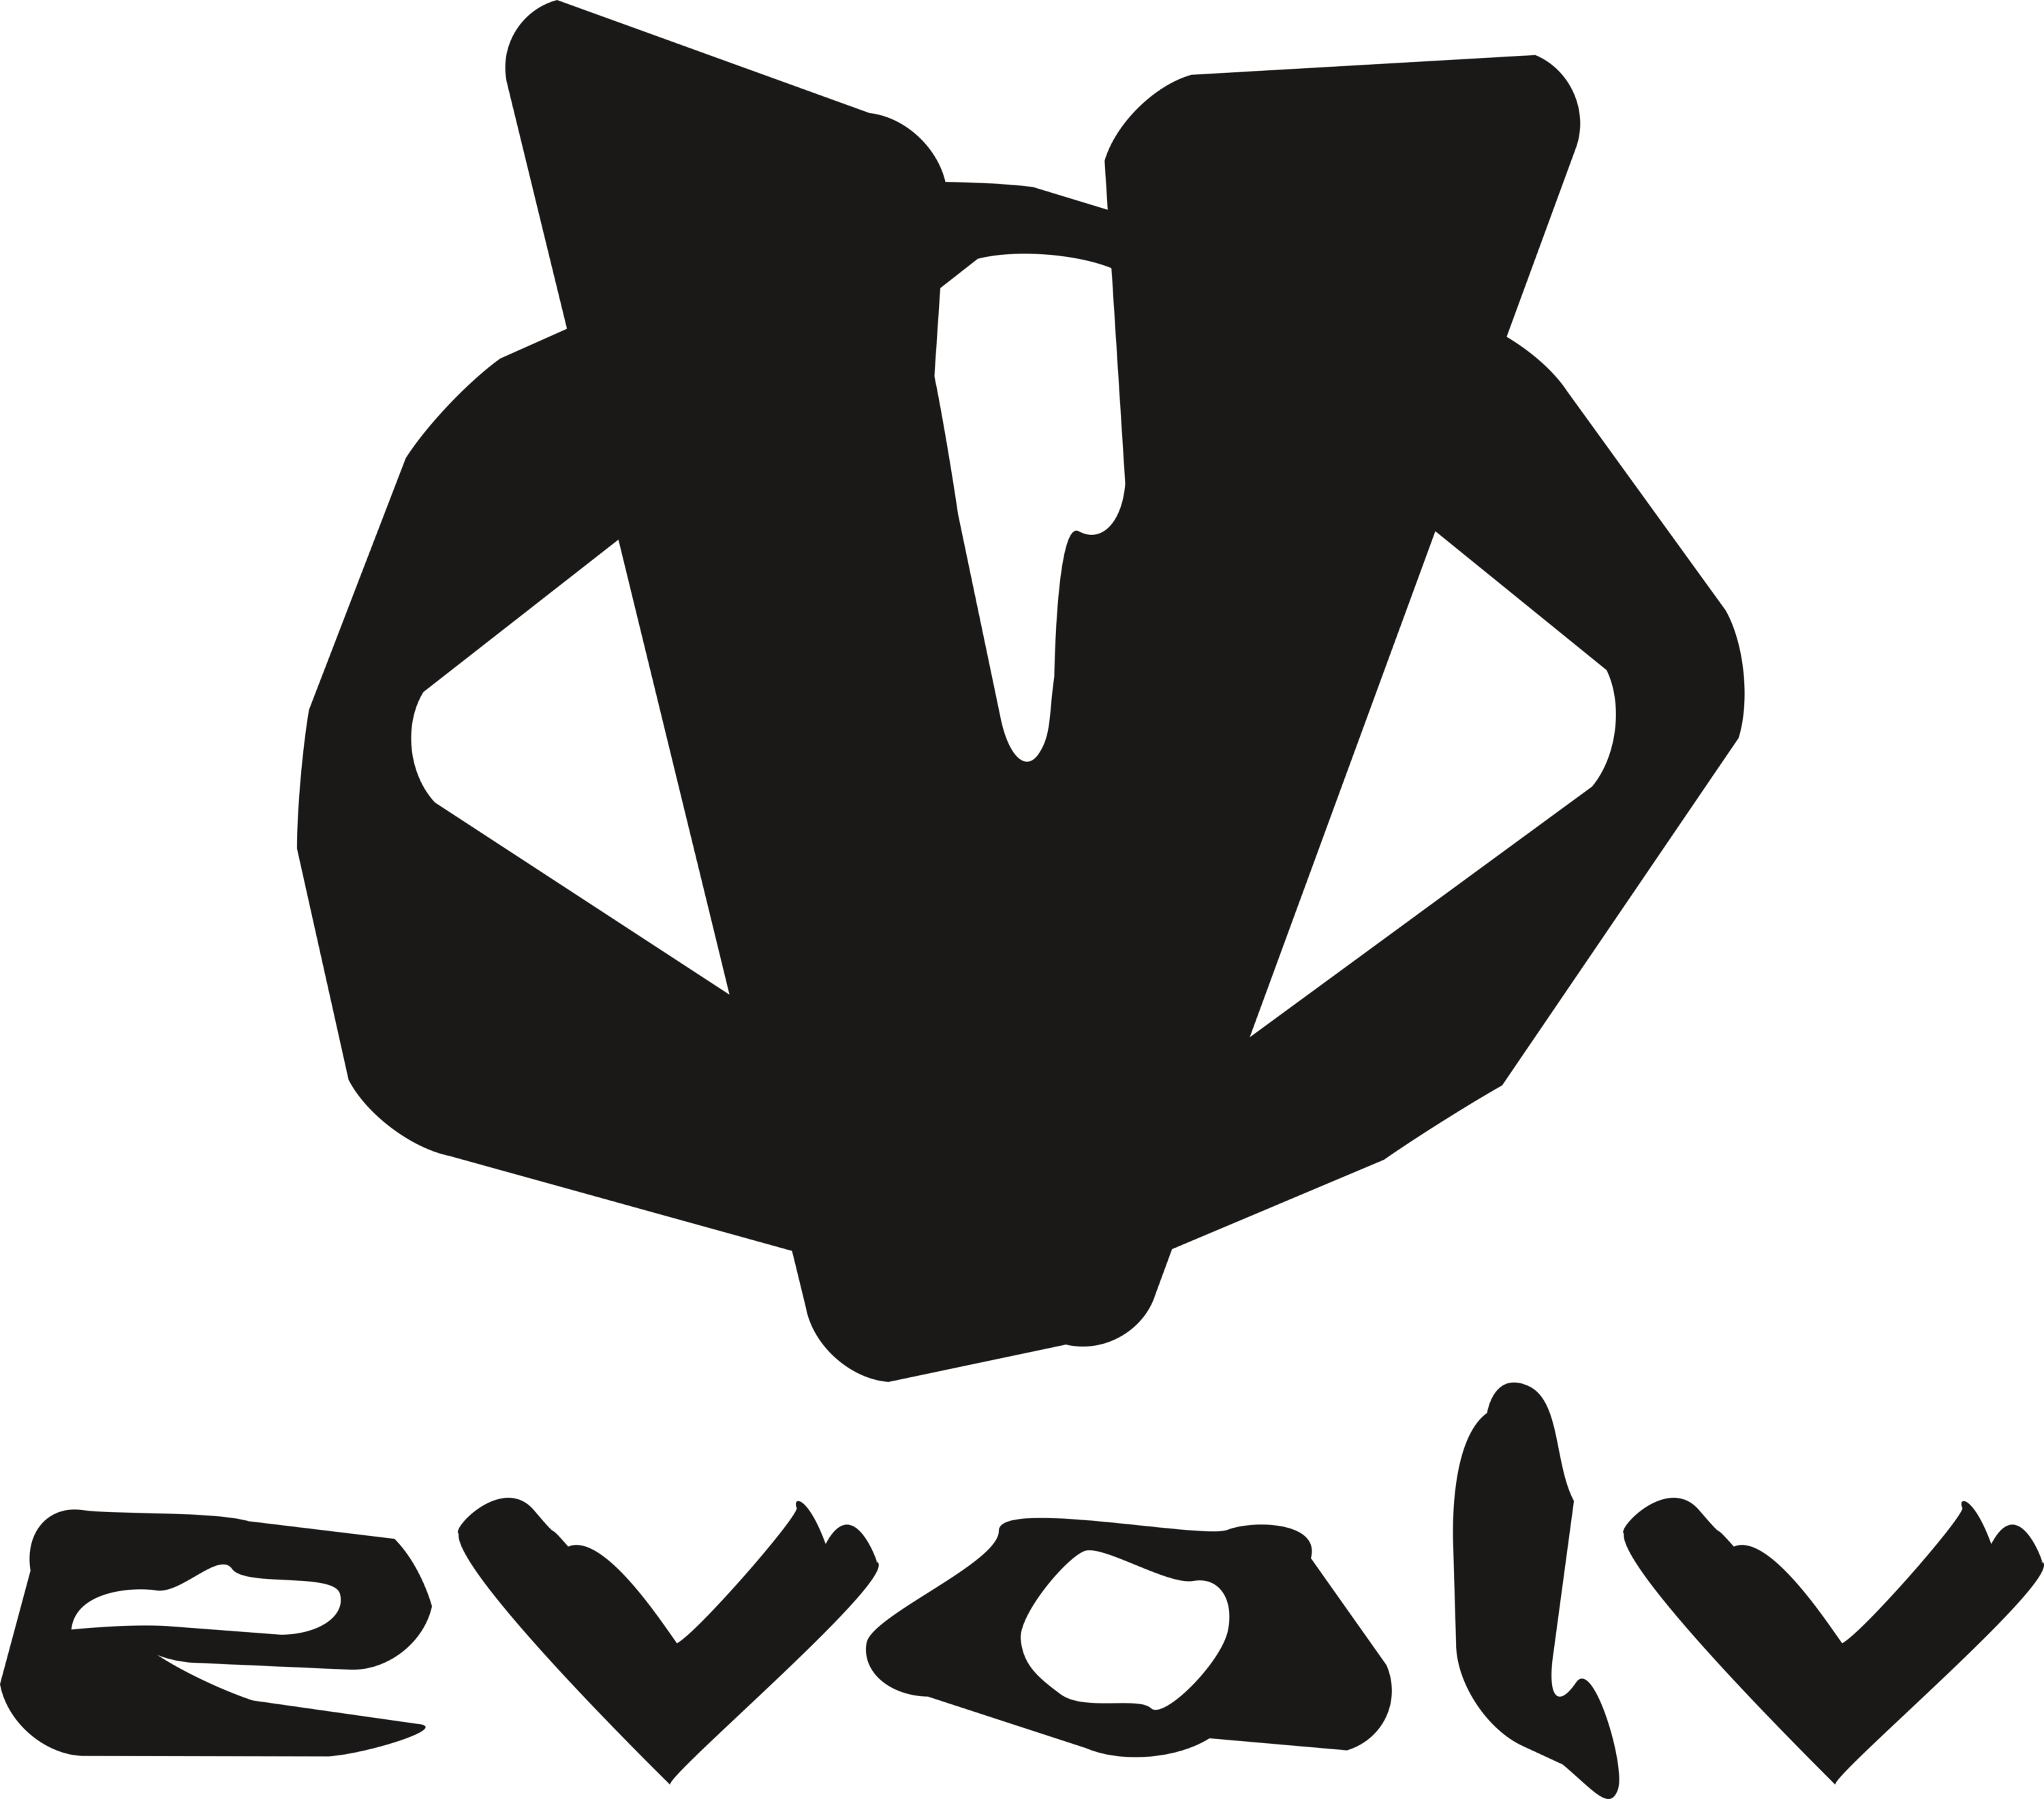 Evolv Logo